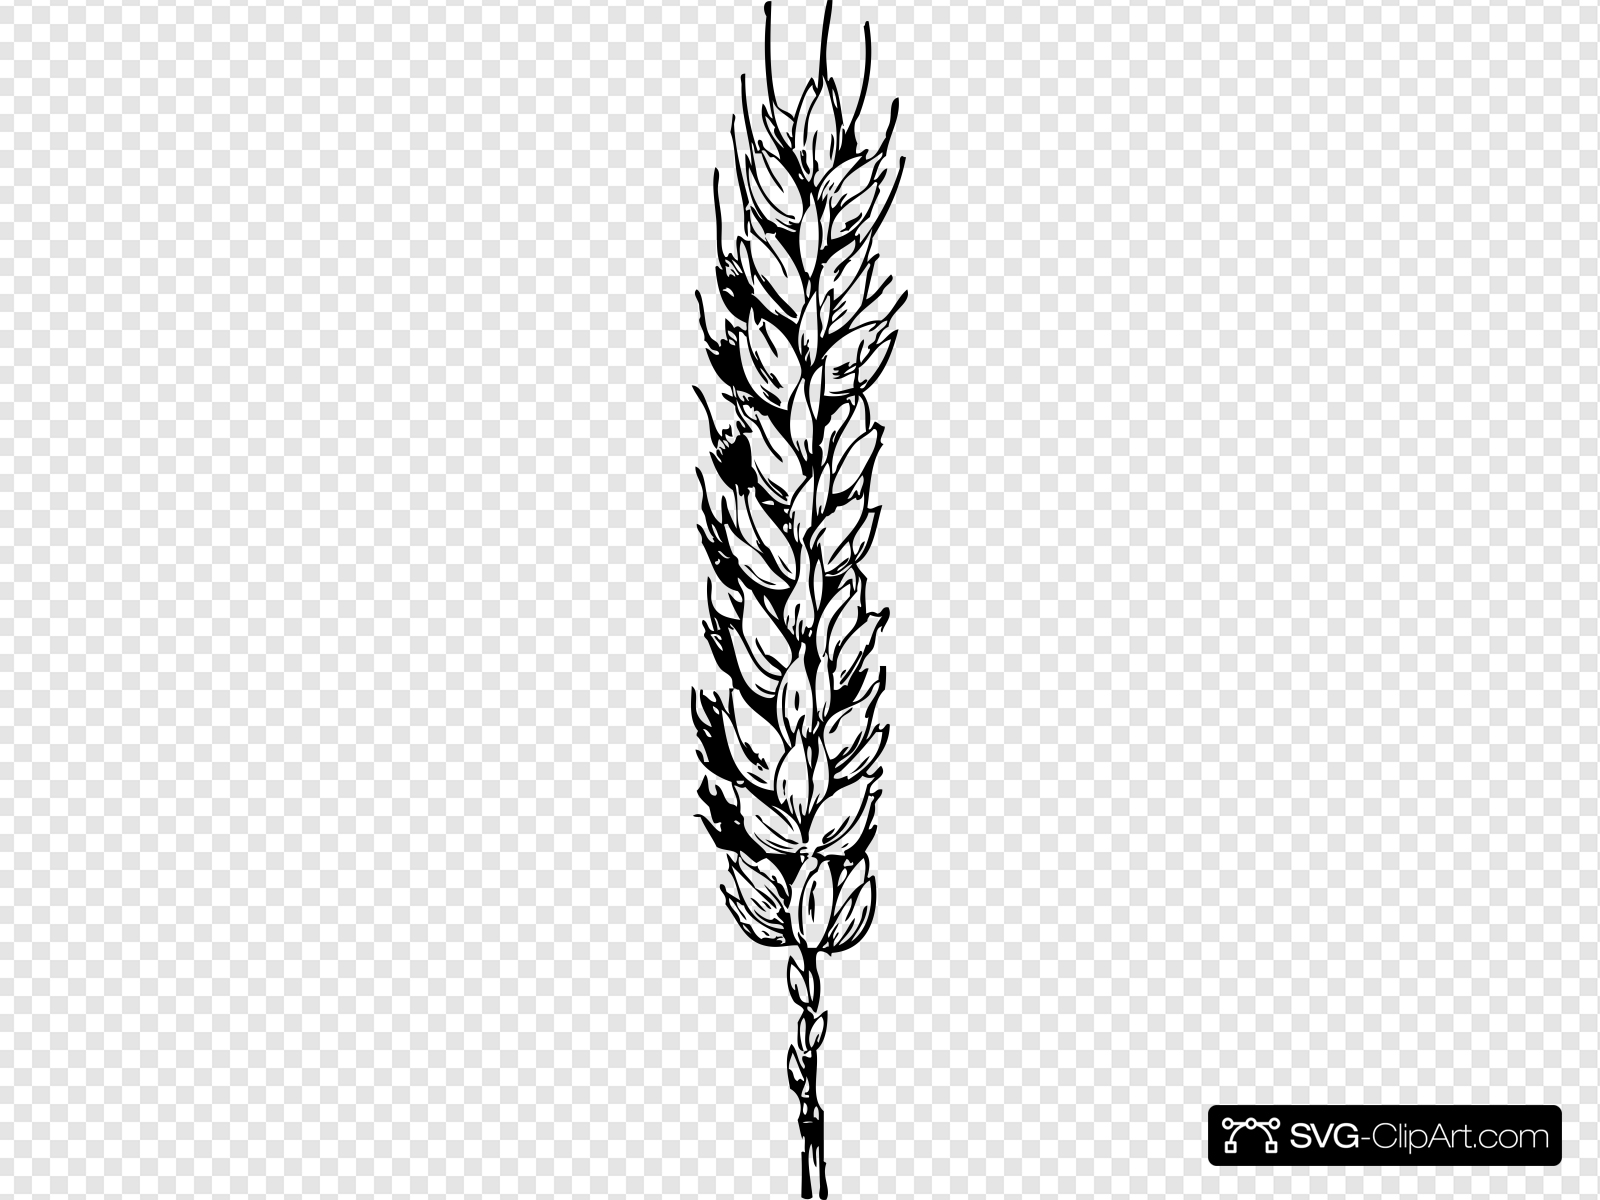 Wheat Clip art, Icon and SVG